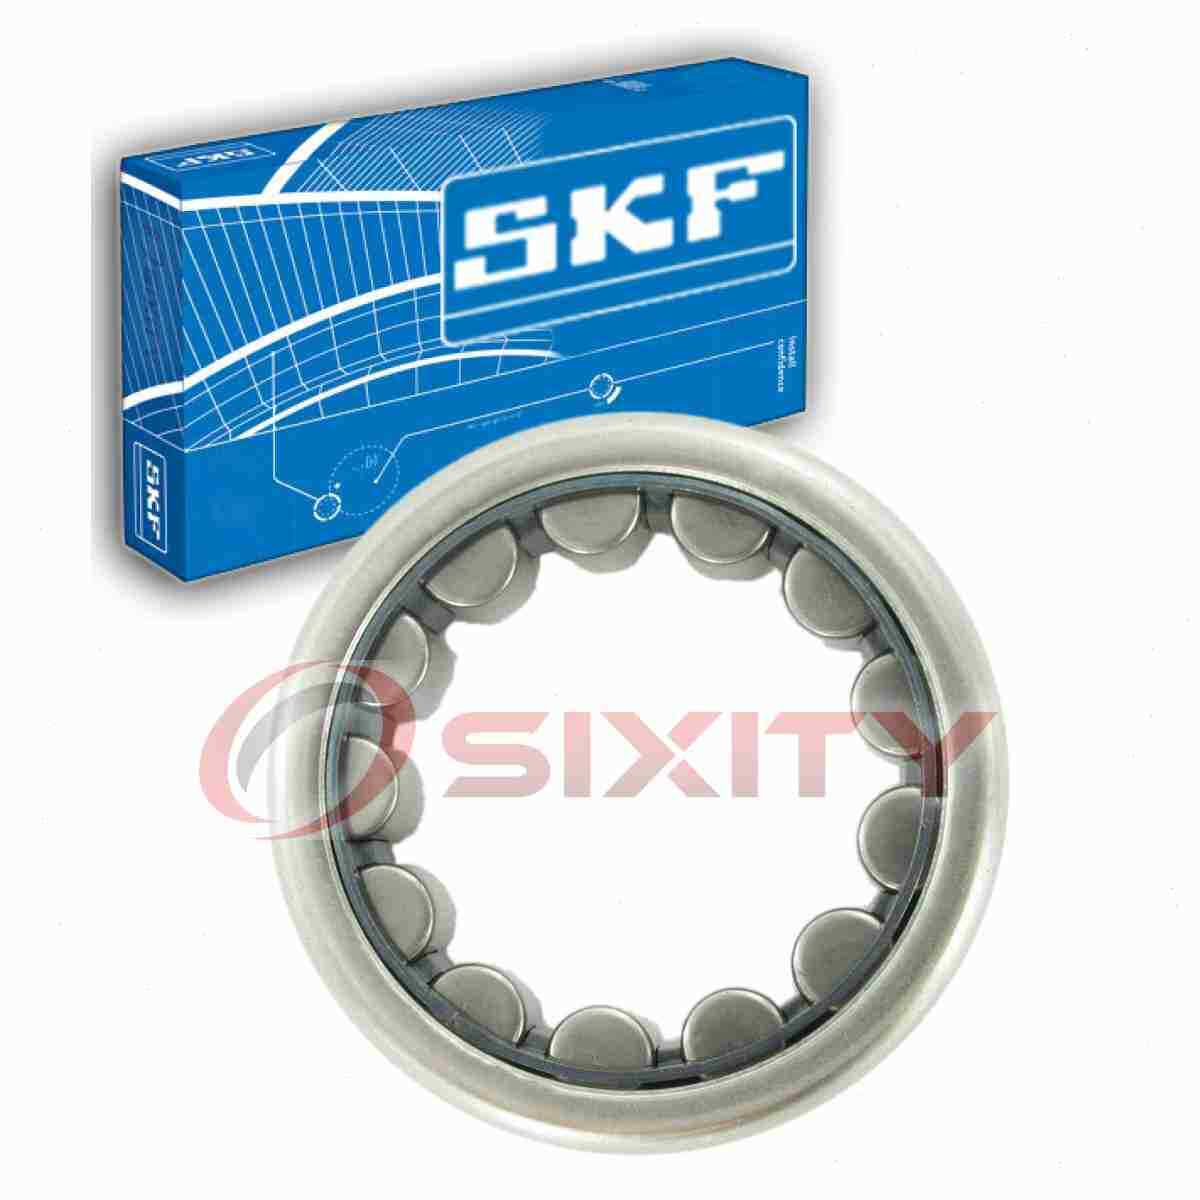 SKF Rear Wheel Bearing for 1975-1989 Plymouth Gran Fury Axle Drivetrain kk